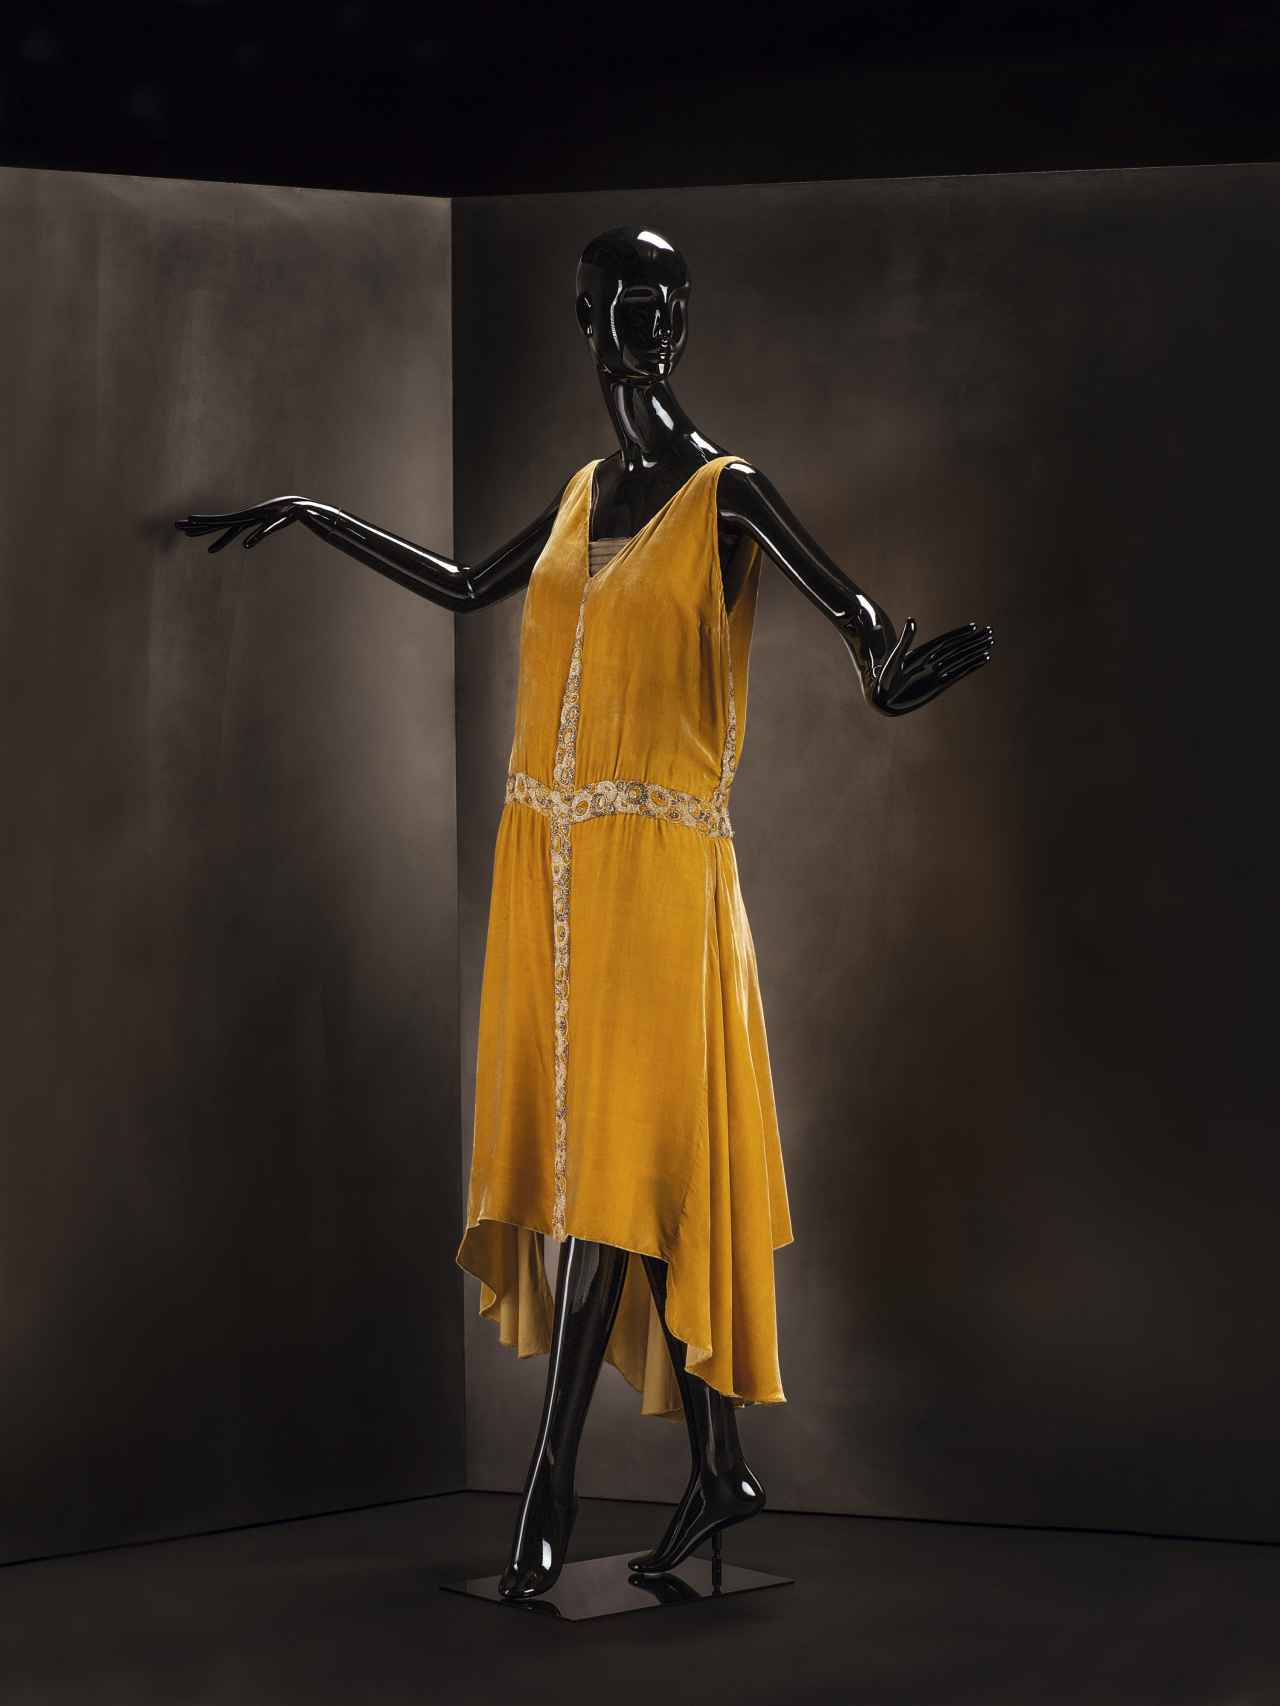 Vestido de noche (1927-1929), de Gabrielle Chanel. Colección Martin Kramer, Suiza. Draiflessen Collection, Mettigen. Foto: Christin Losta